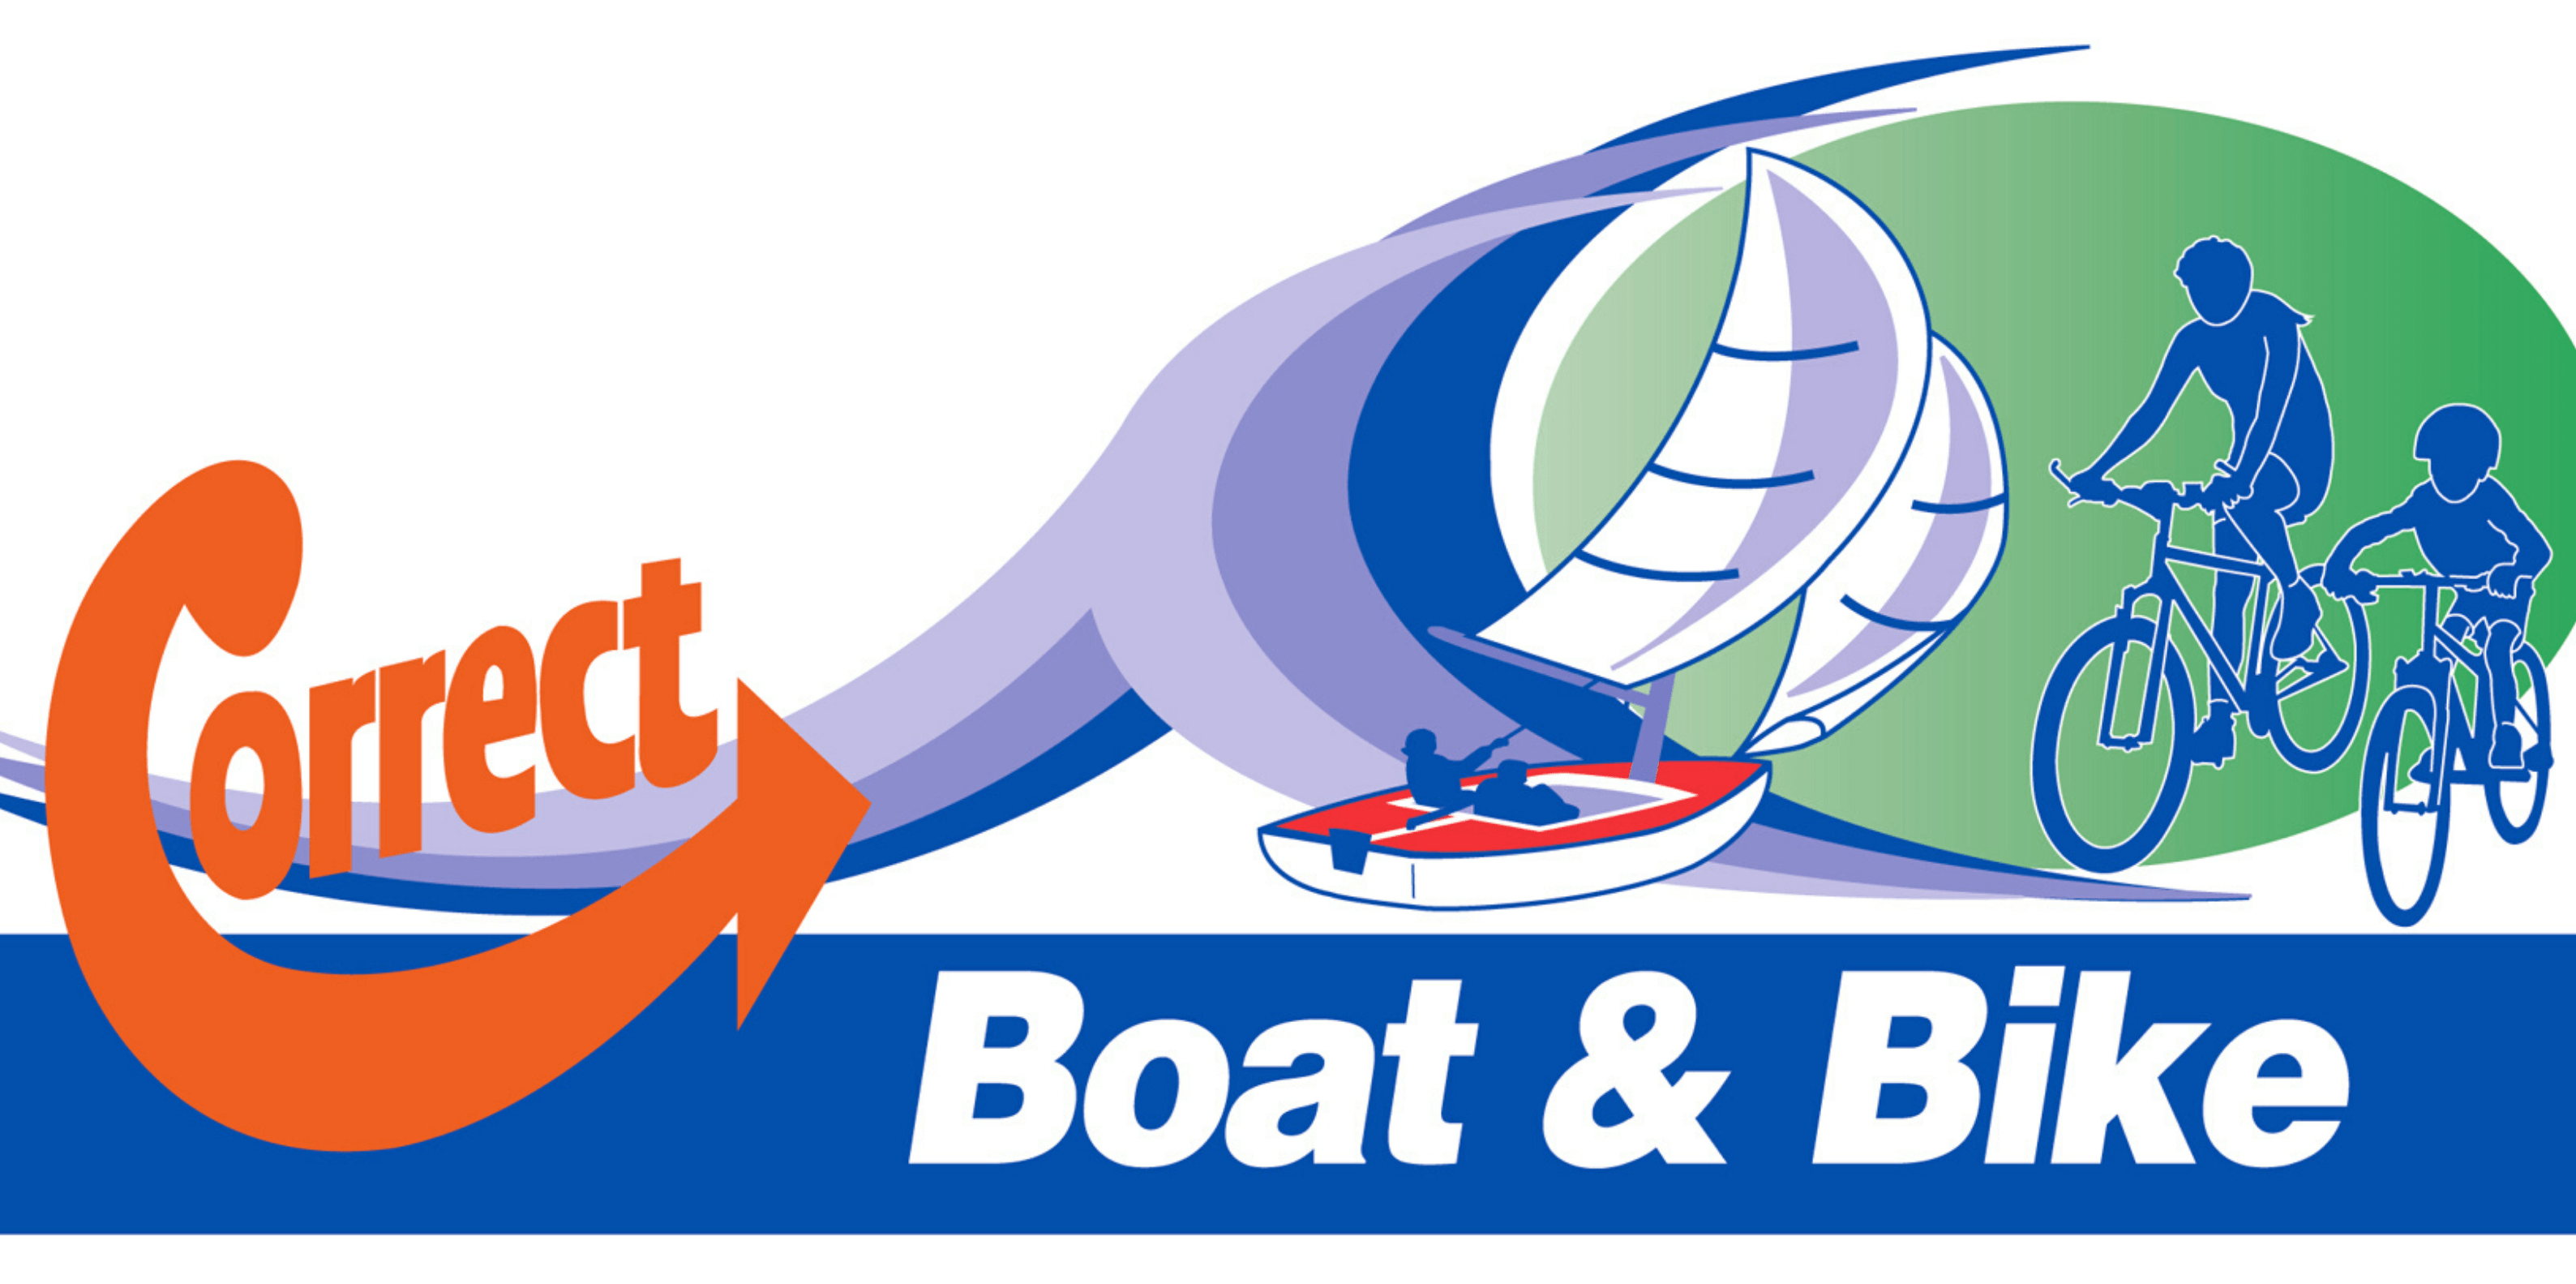 Correct boat en bike logo